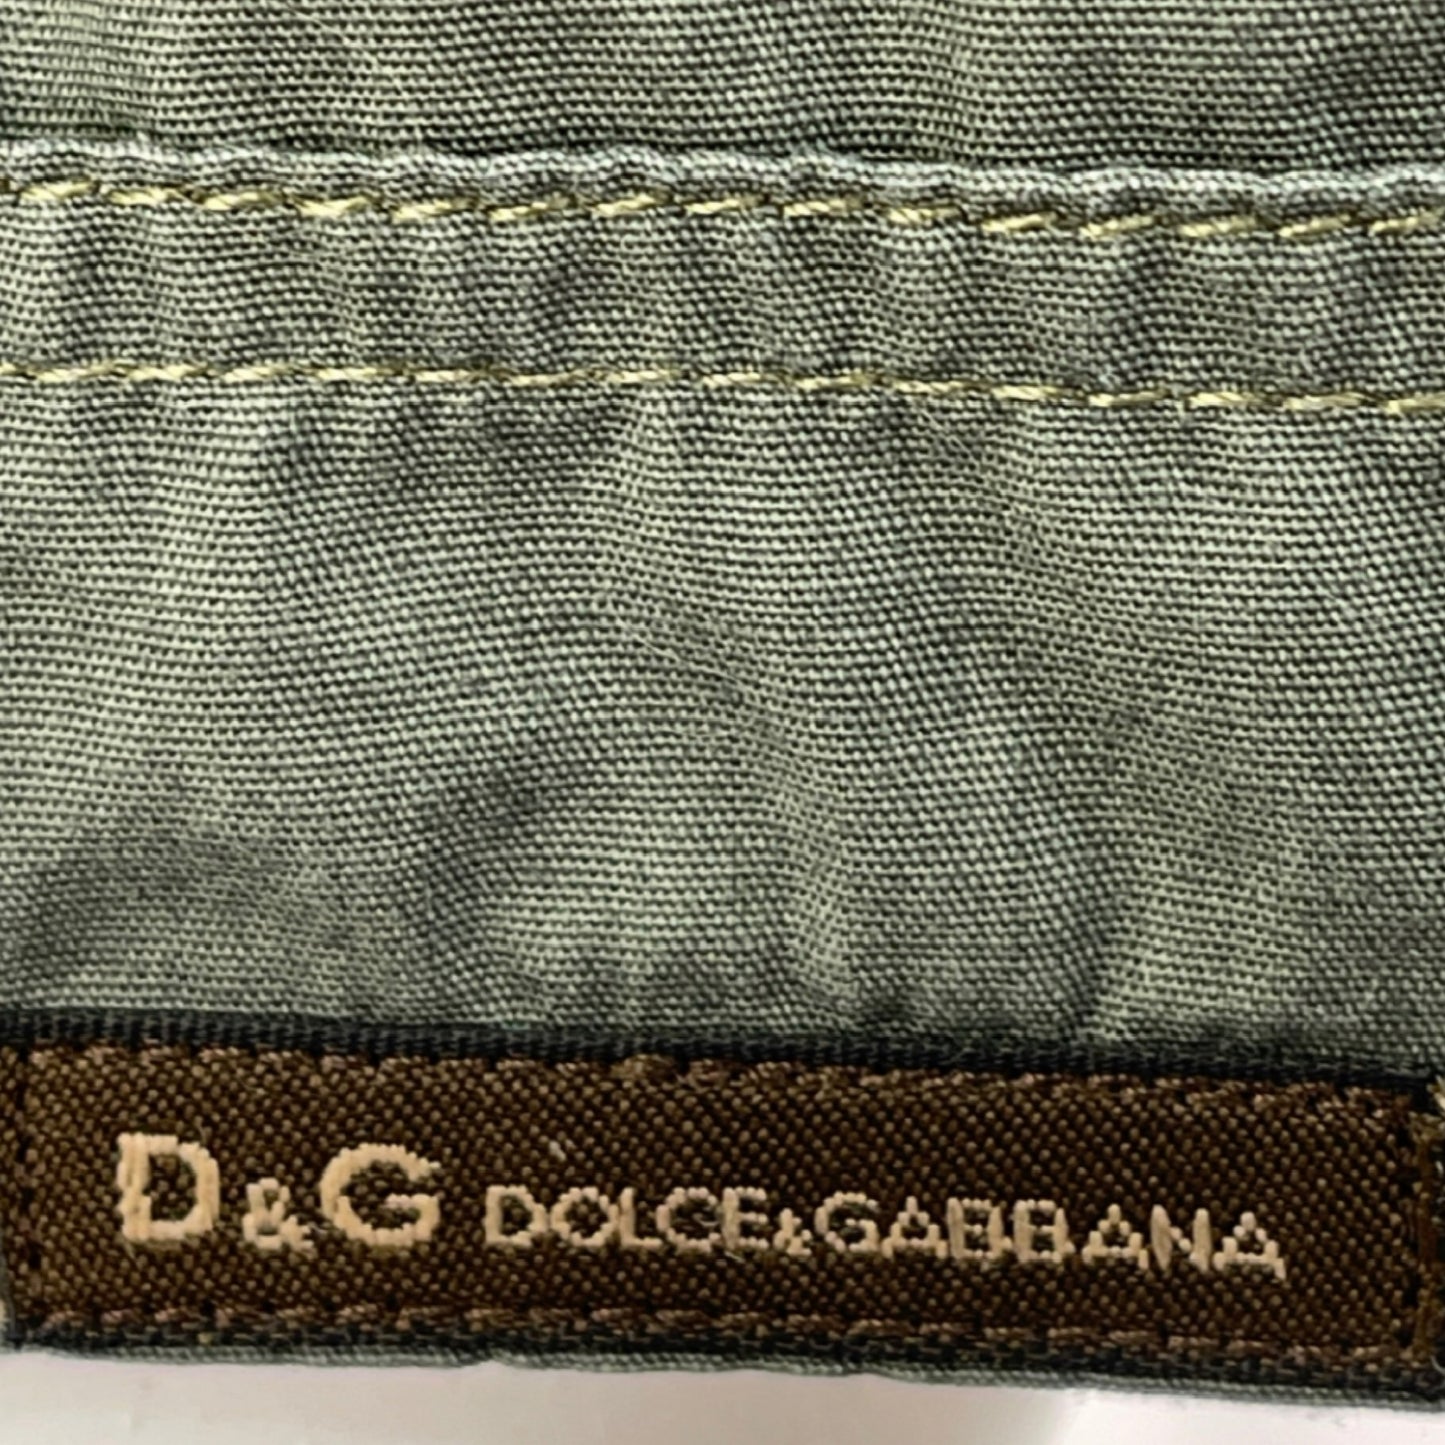 Camicia D & G - Dolce & Gabbana - tg. Large - Verde Stampa Retro